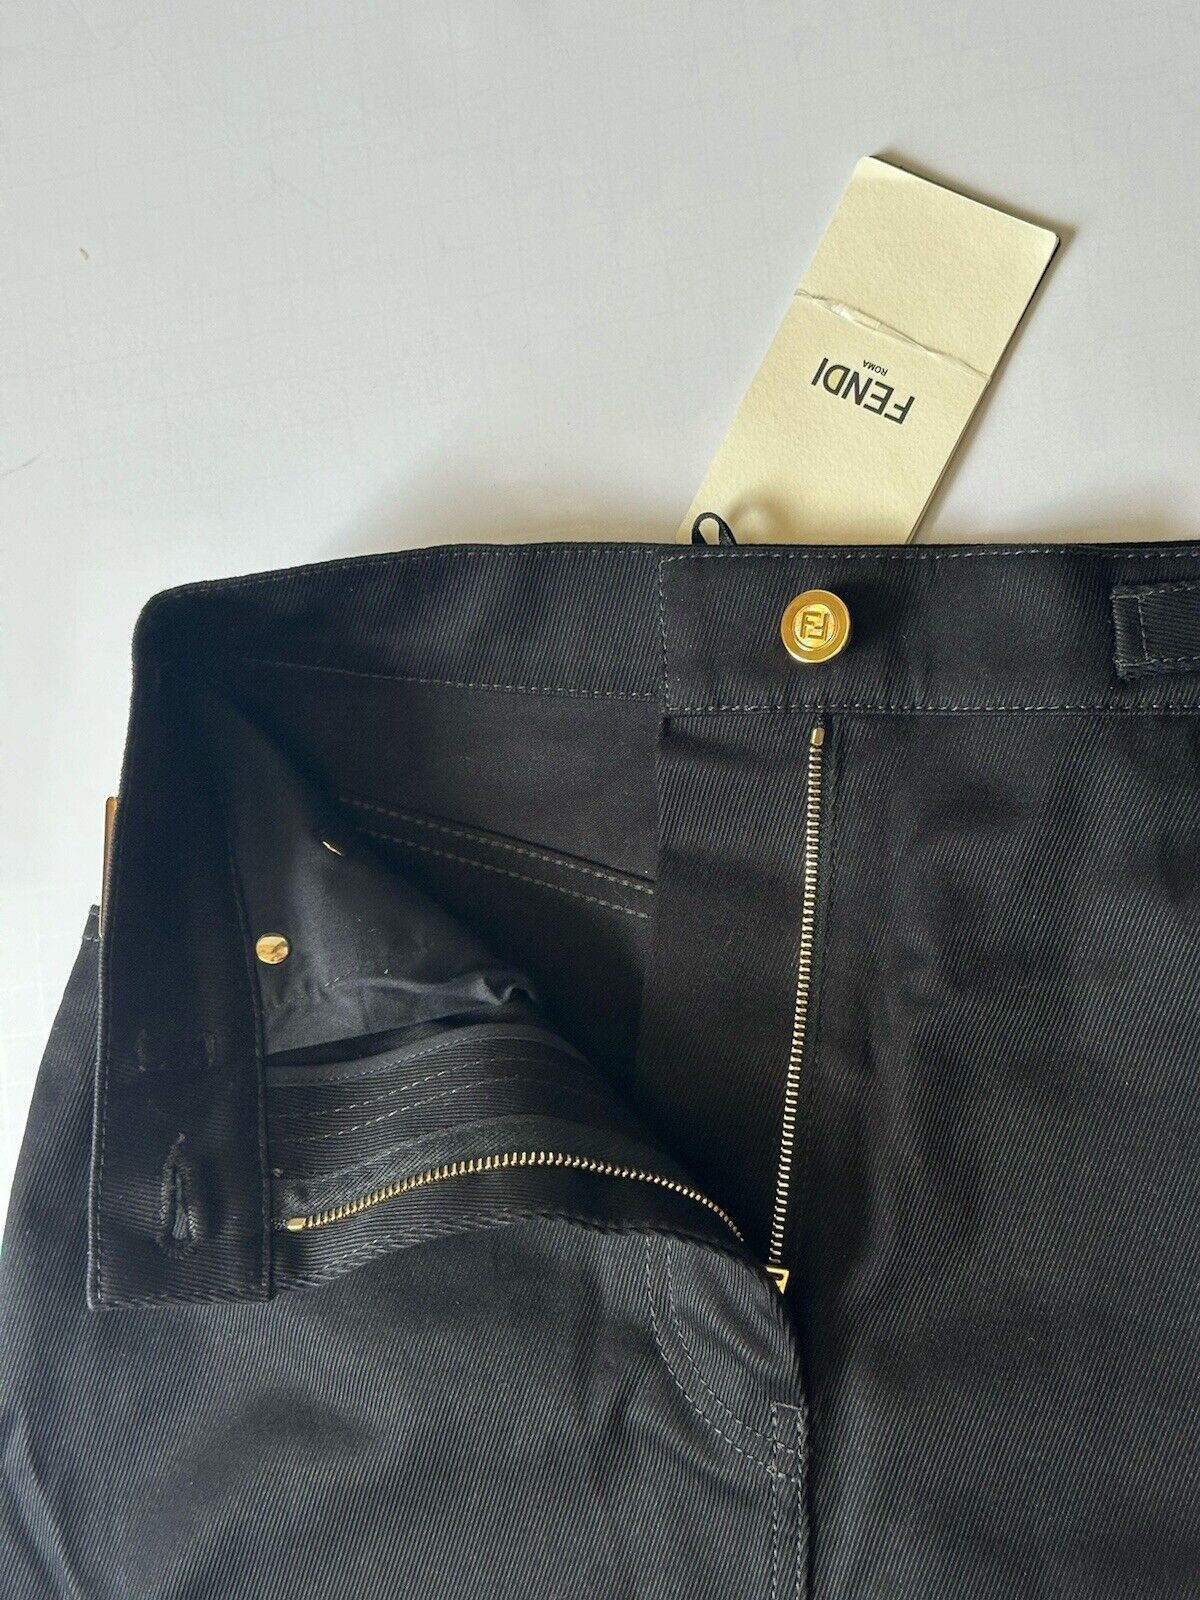 Fendi Woven Denim Black Skirt 2 US (38 Euro) Italy FLQ548 NWT $790